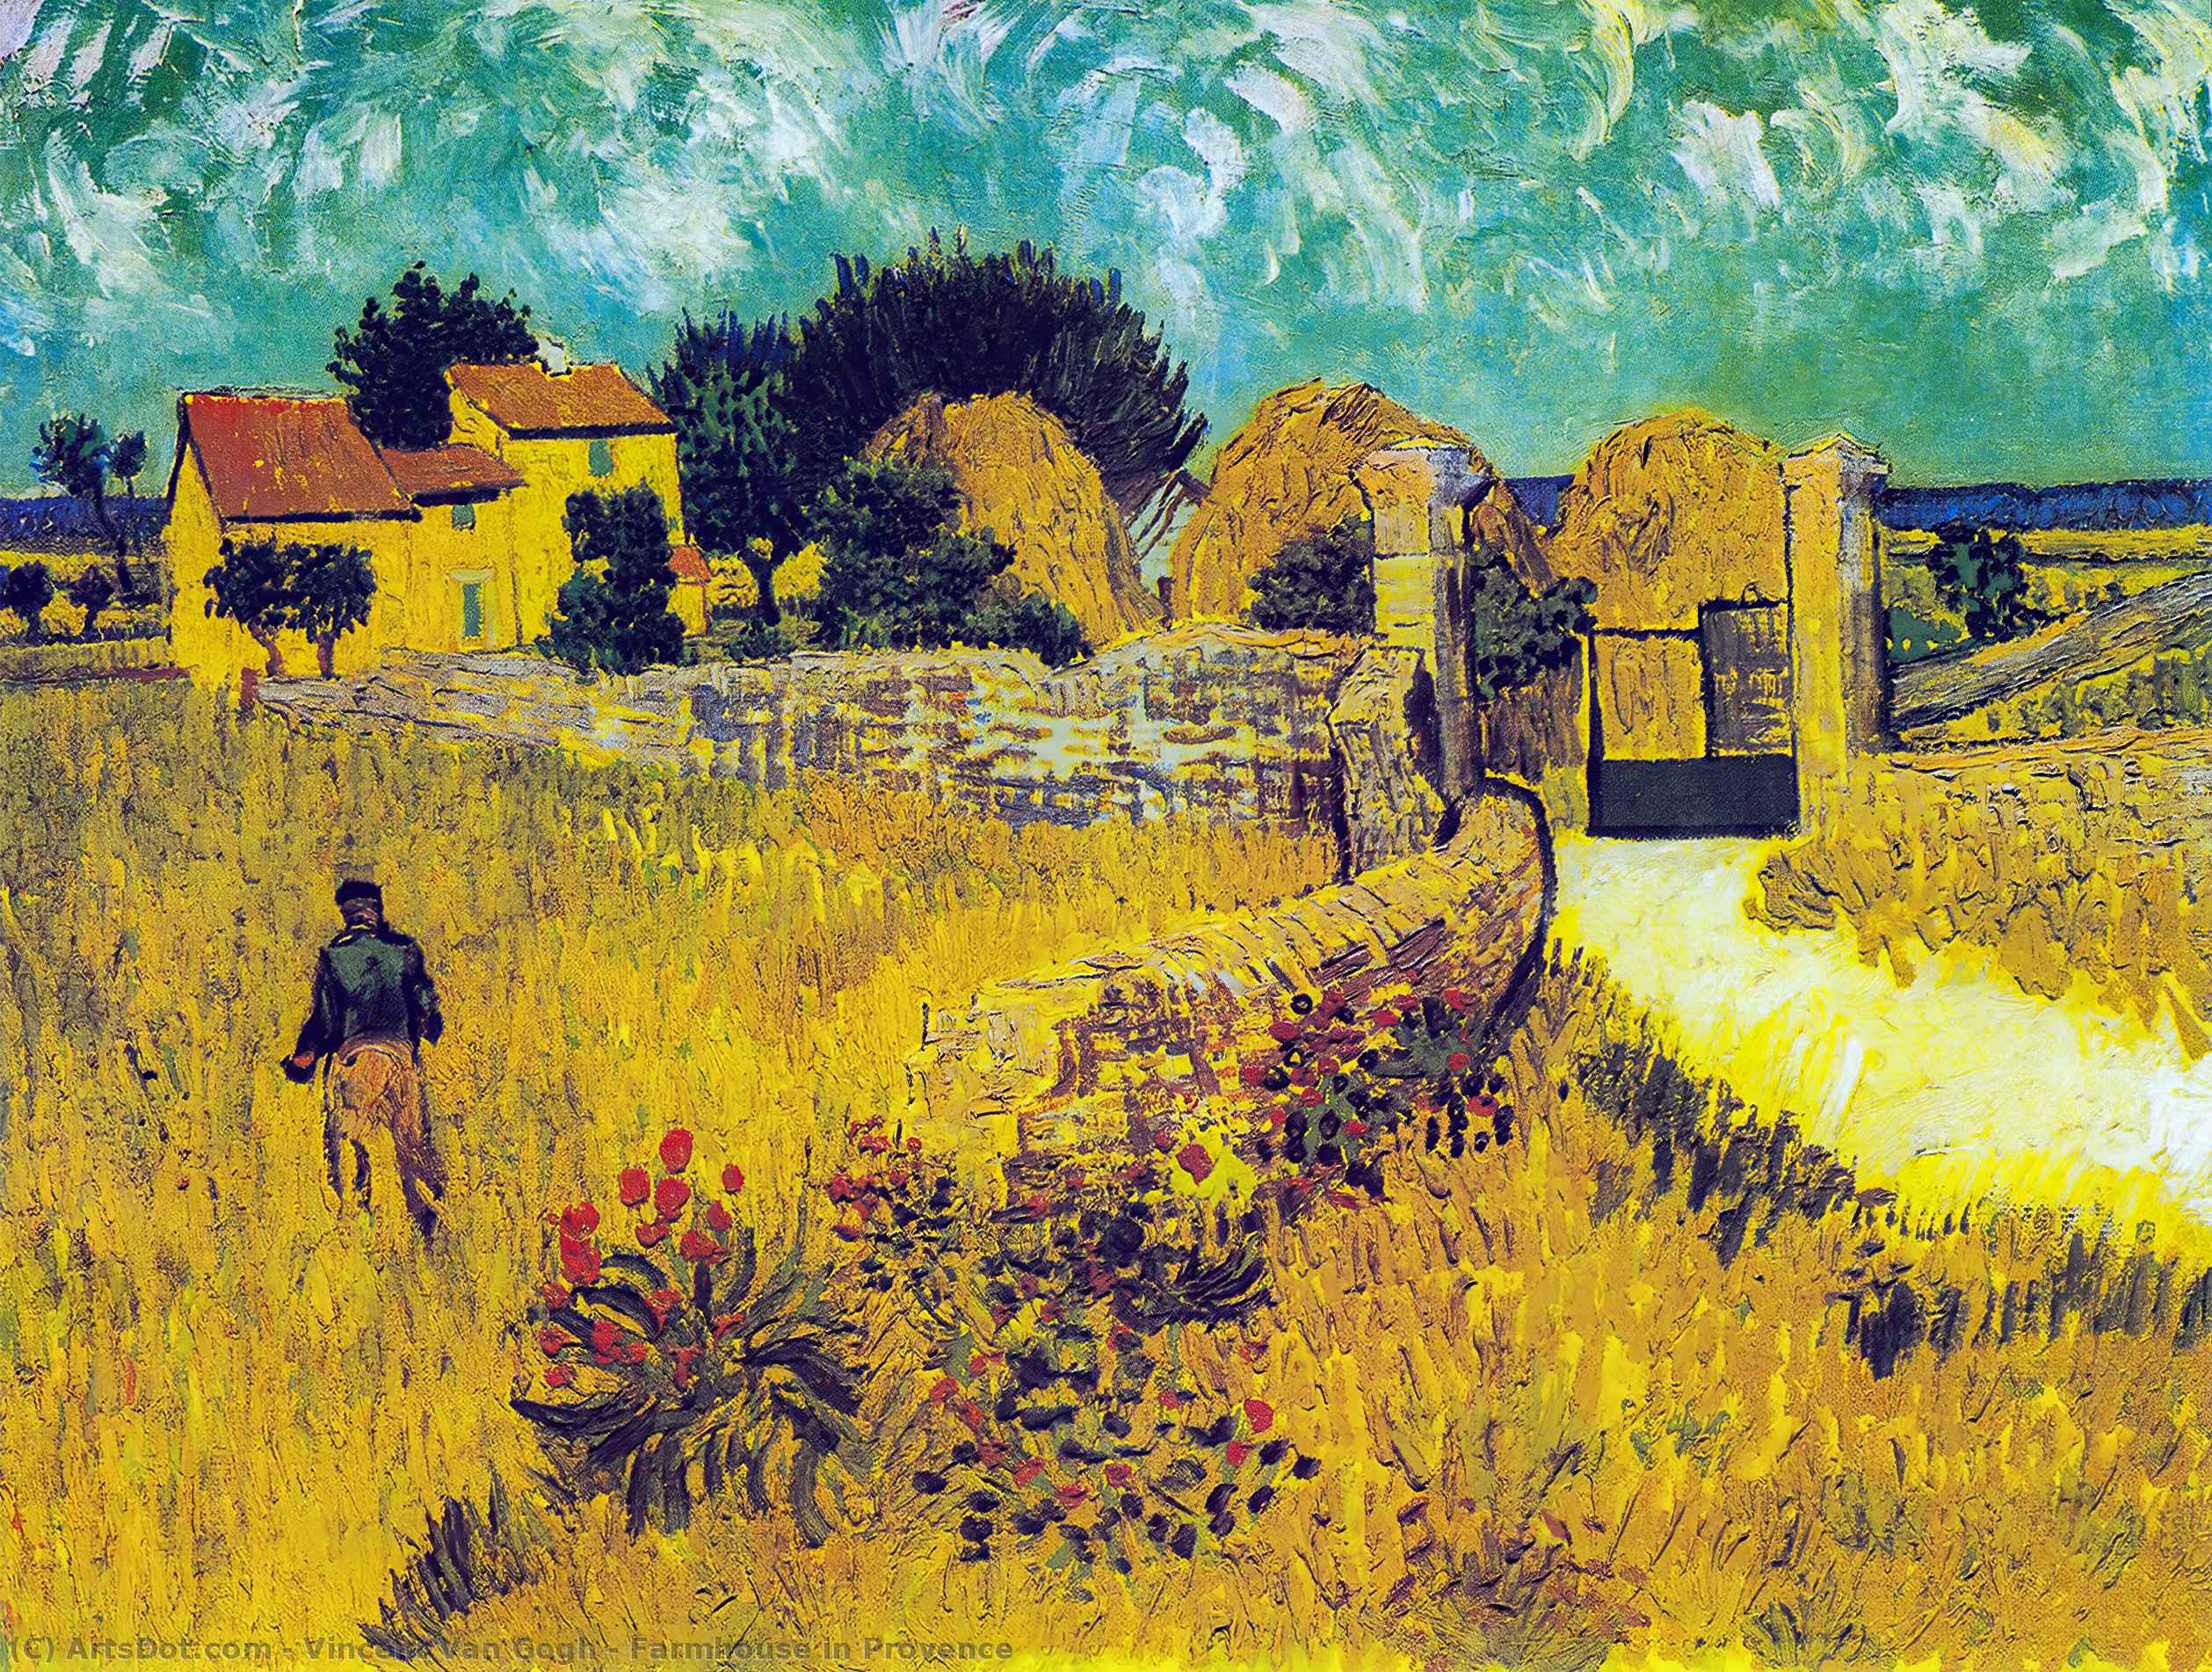 Ordinare Riproduzioni Di Quadri Agriturismi in Provenza, 1888 di Vincent Van Gogh (1853-1890, Netherlands) | ArtsDot.com